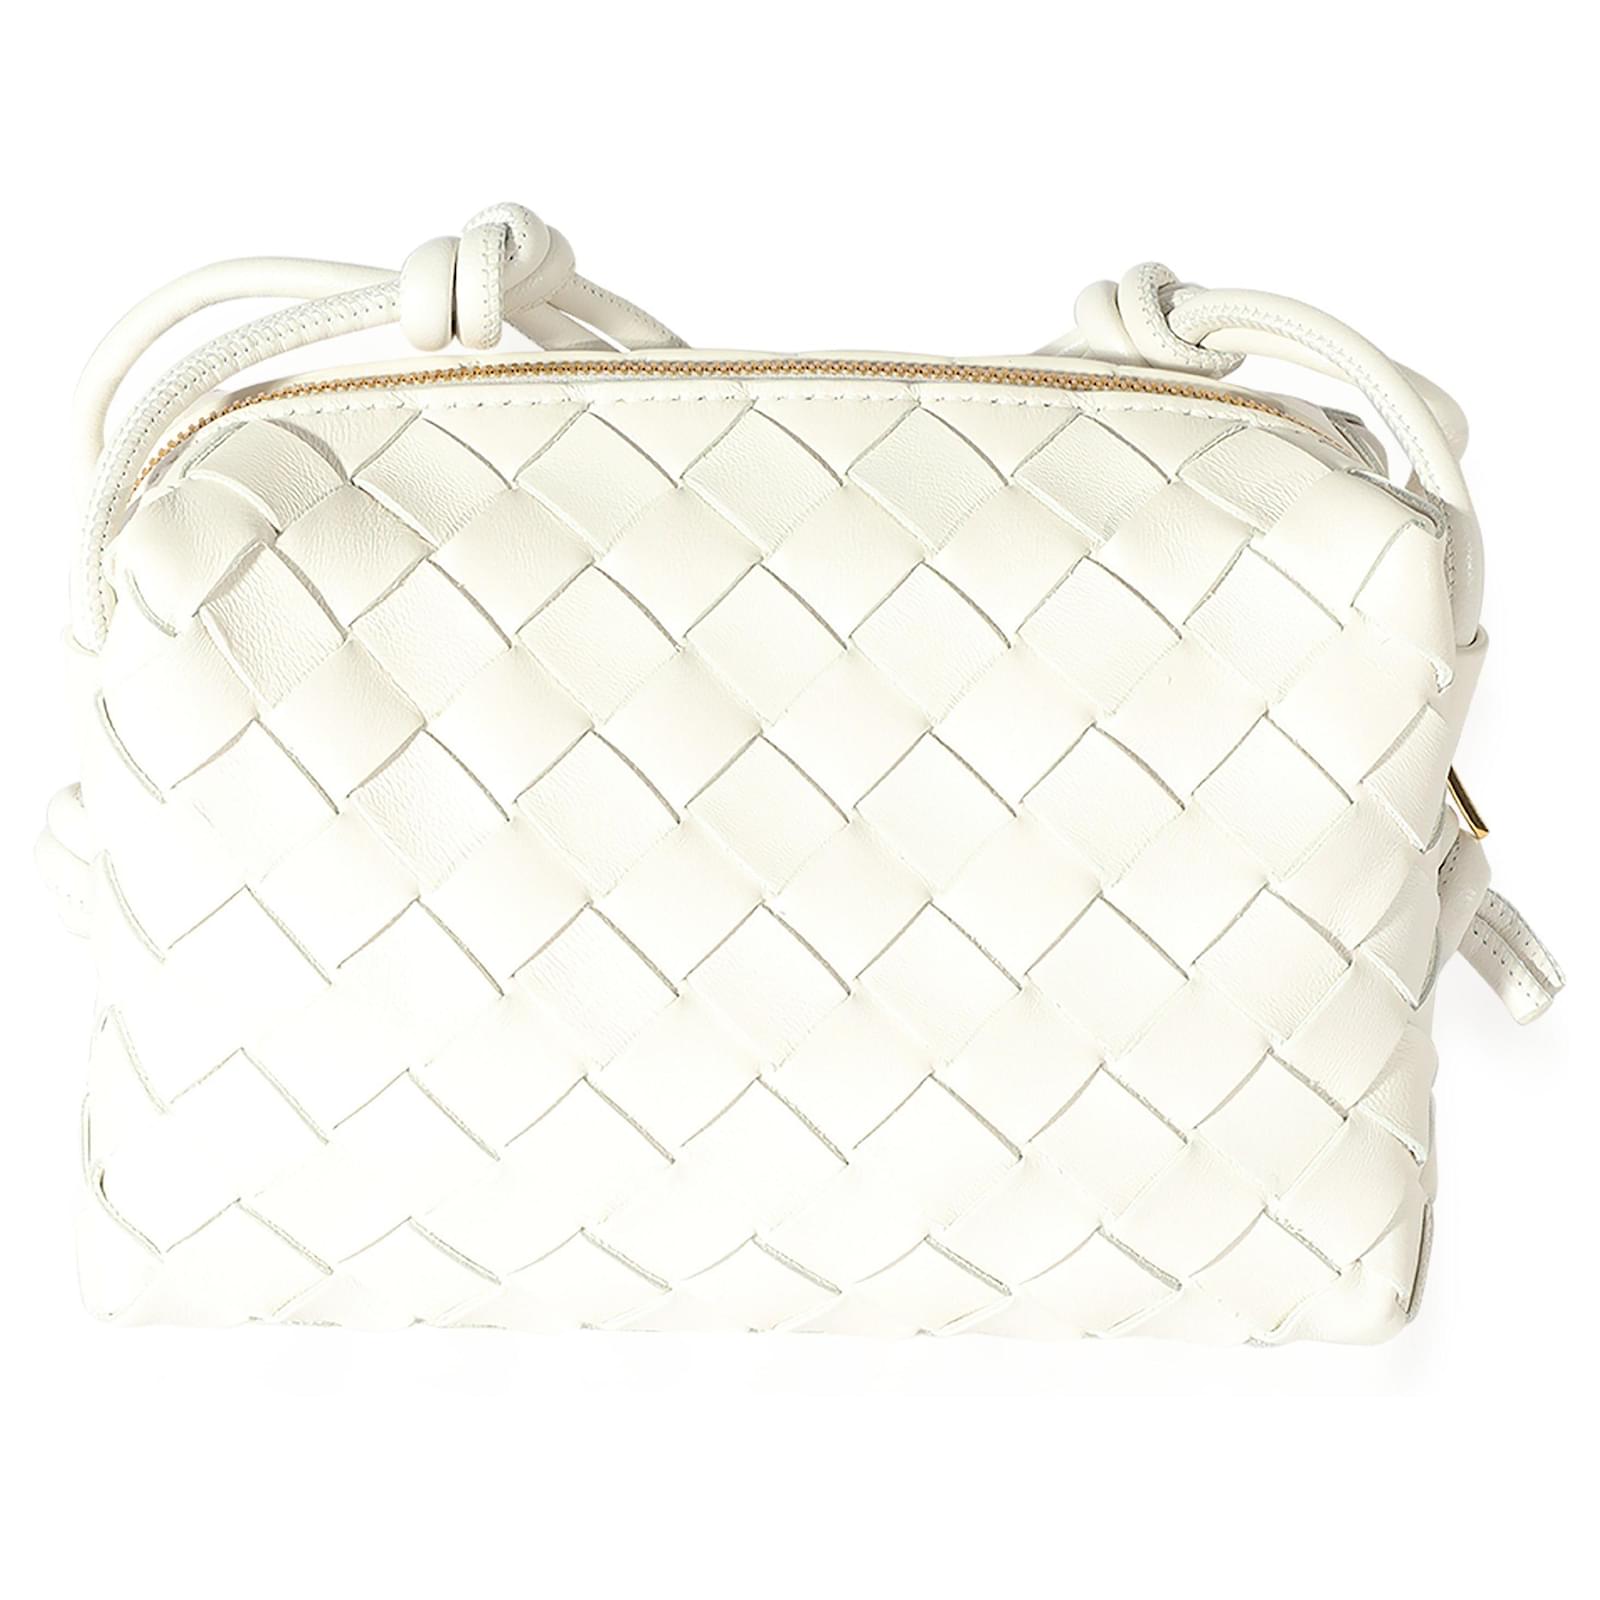 Bottega Veneta Loop Intrecciato Leather Shoulder Bag - White - One Size